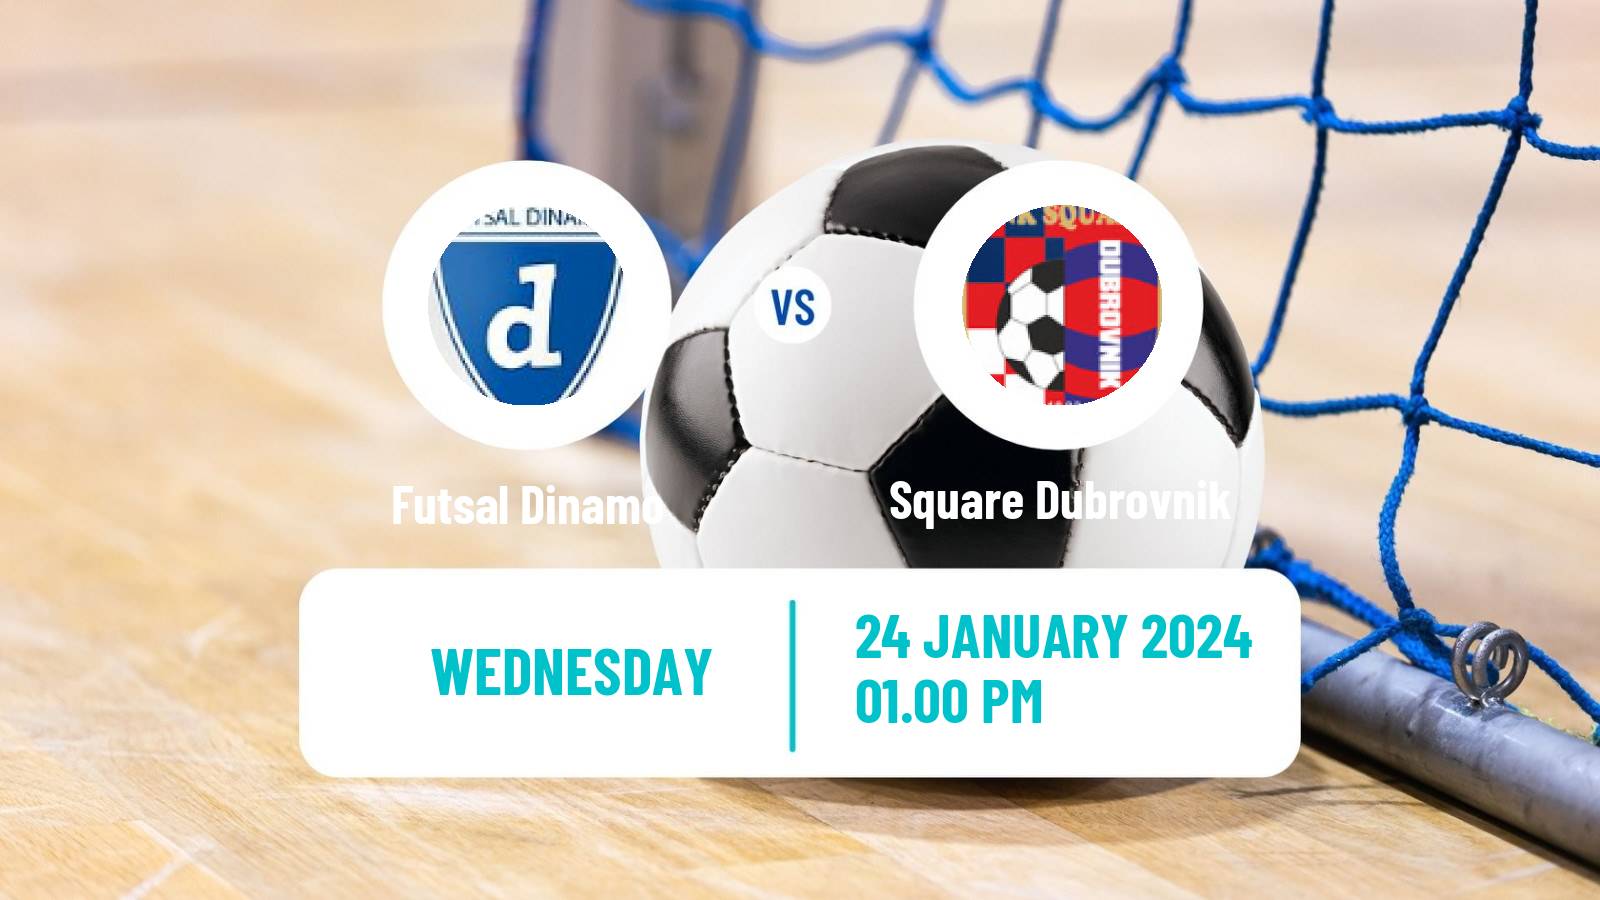 Futsal Croatian 1 HMNL Futsal Dinamo - Square Dubrovnik